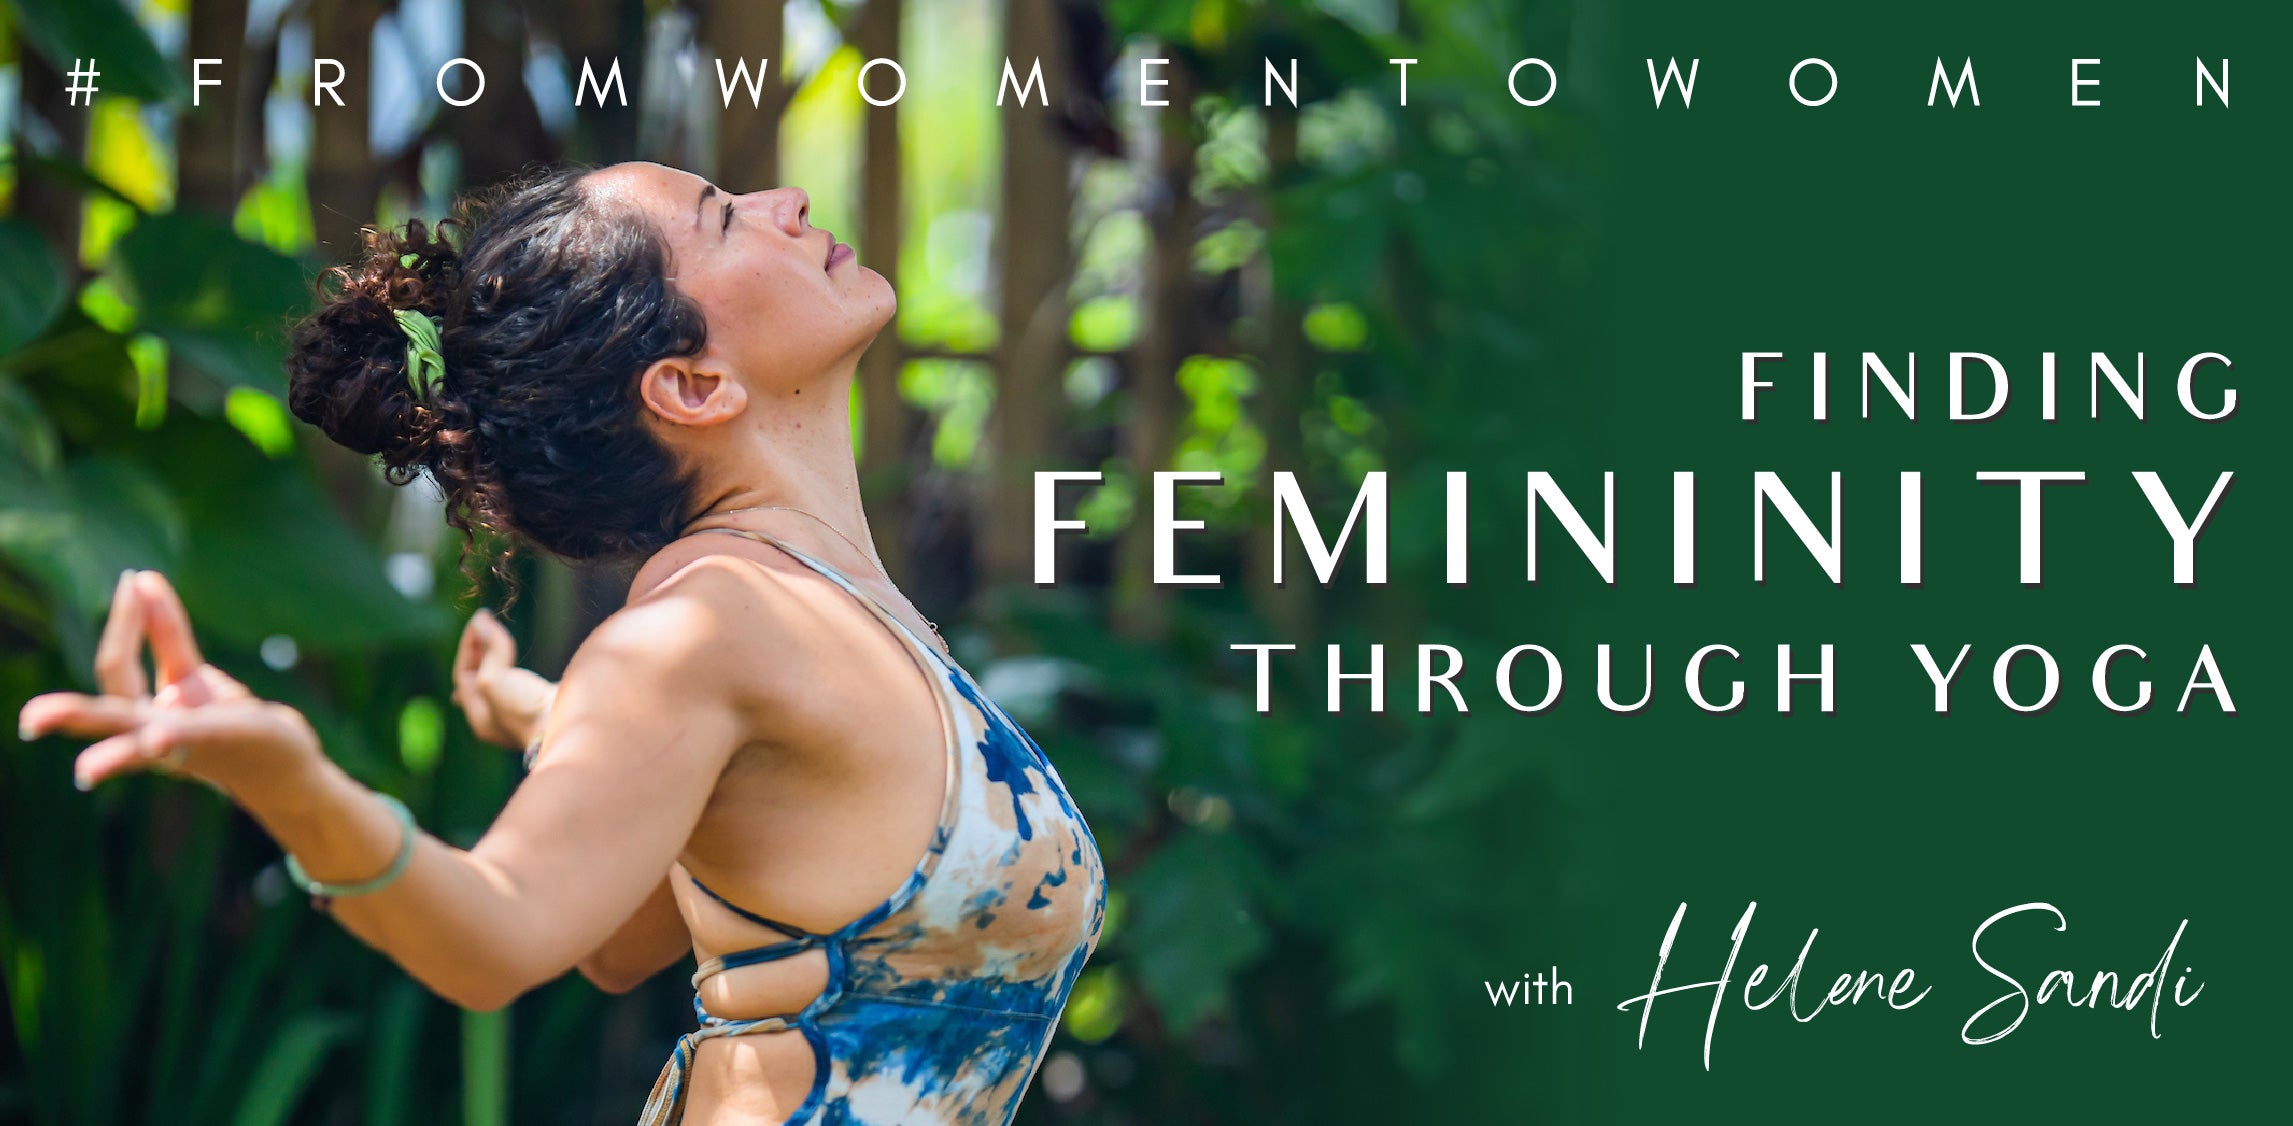 Finding Femininity Through Yoga with Helene Sandi